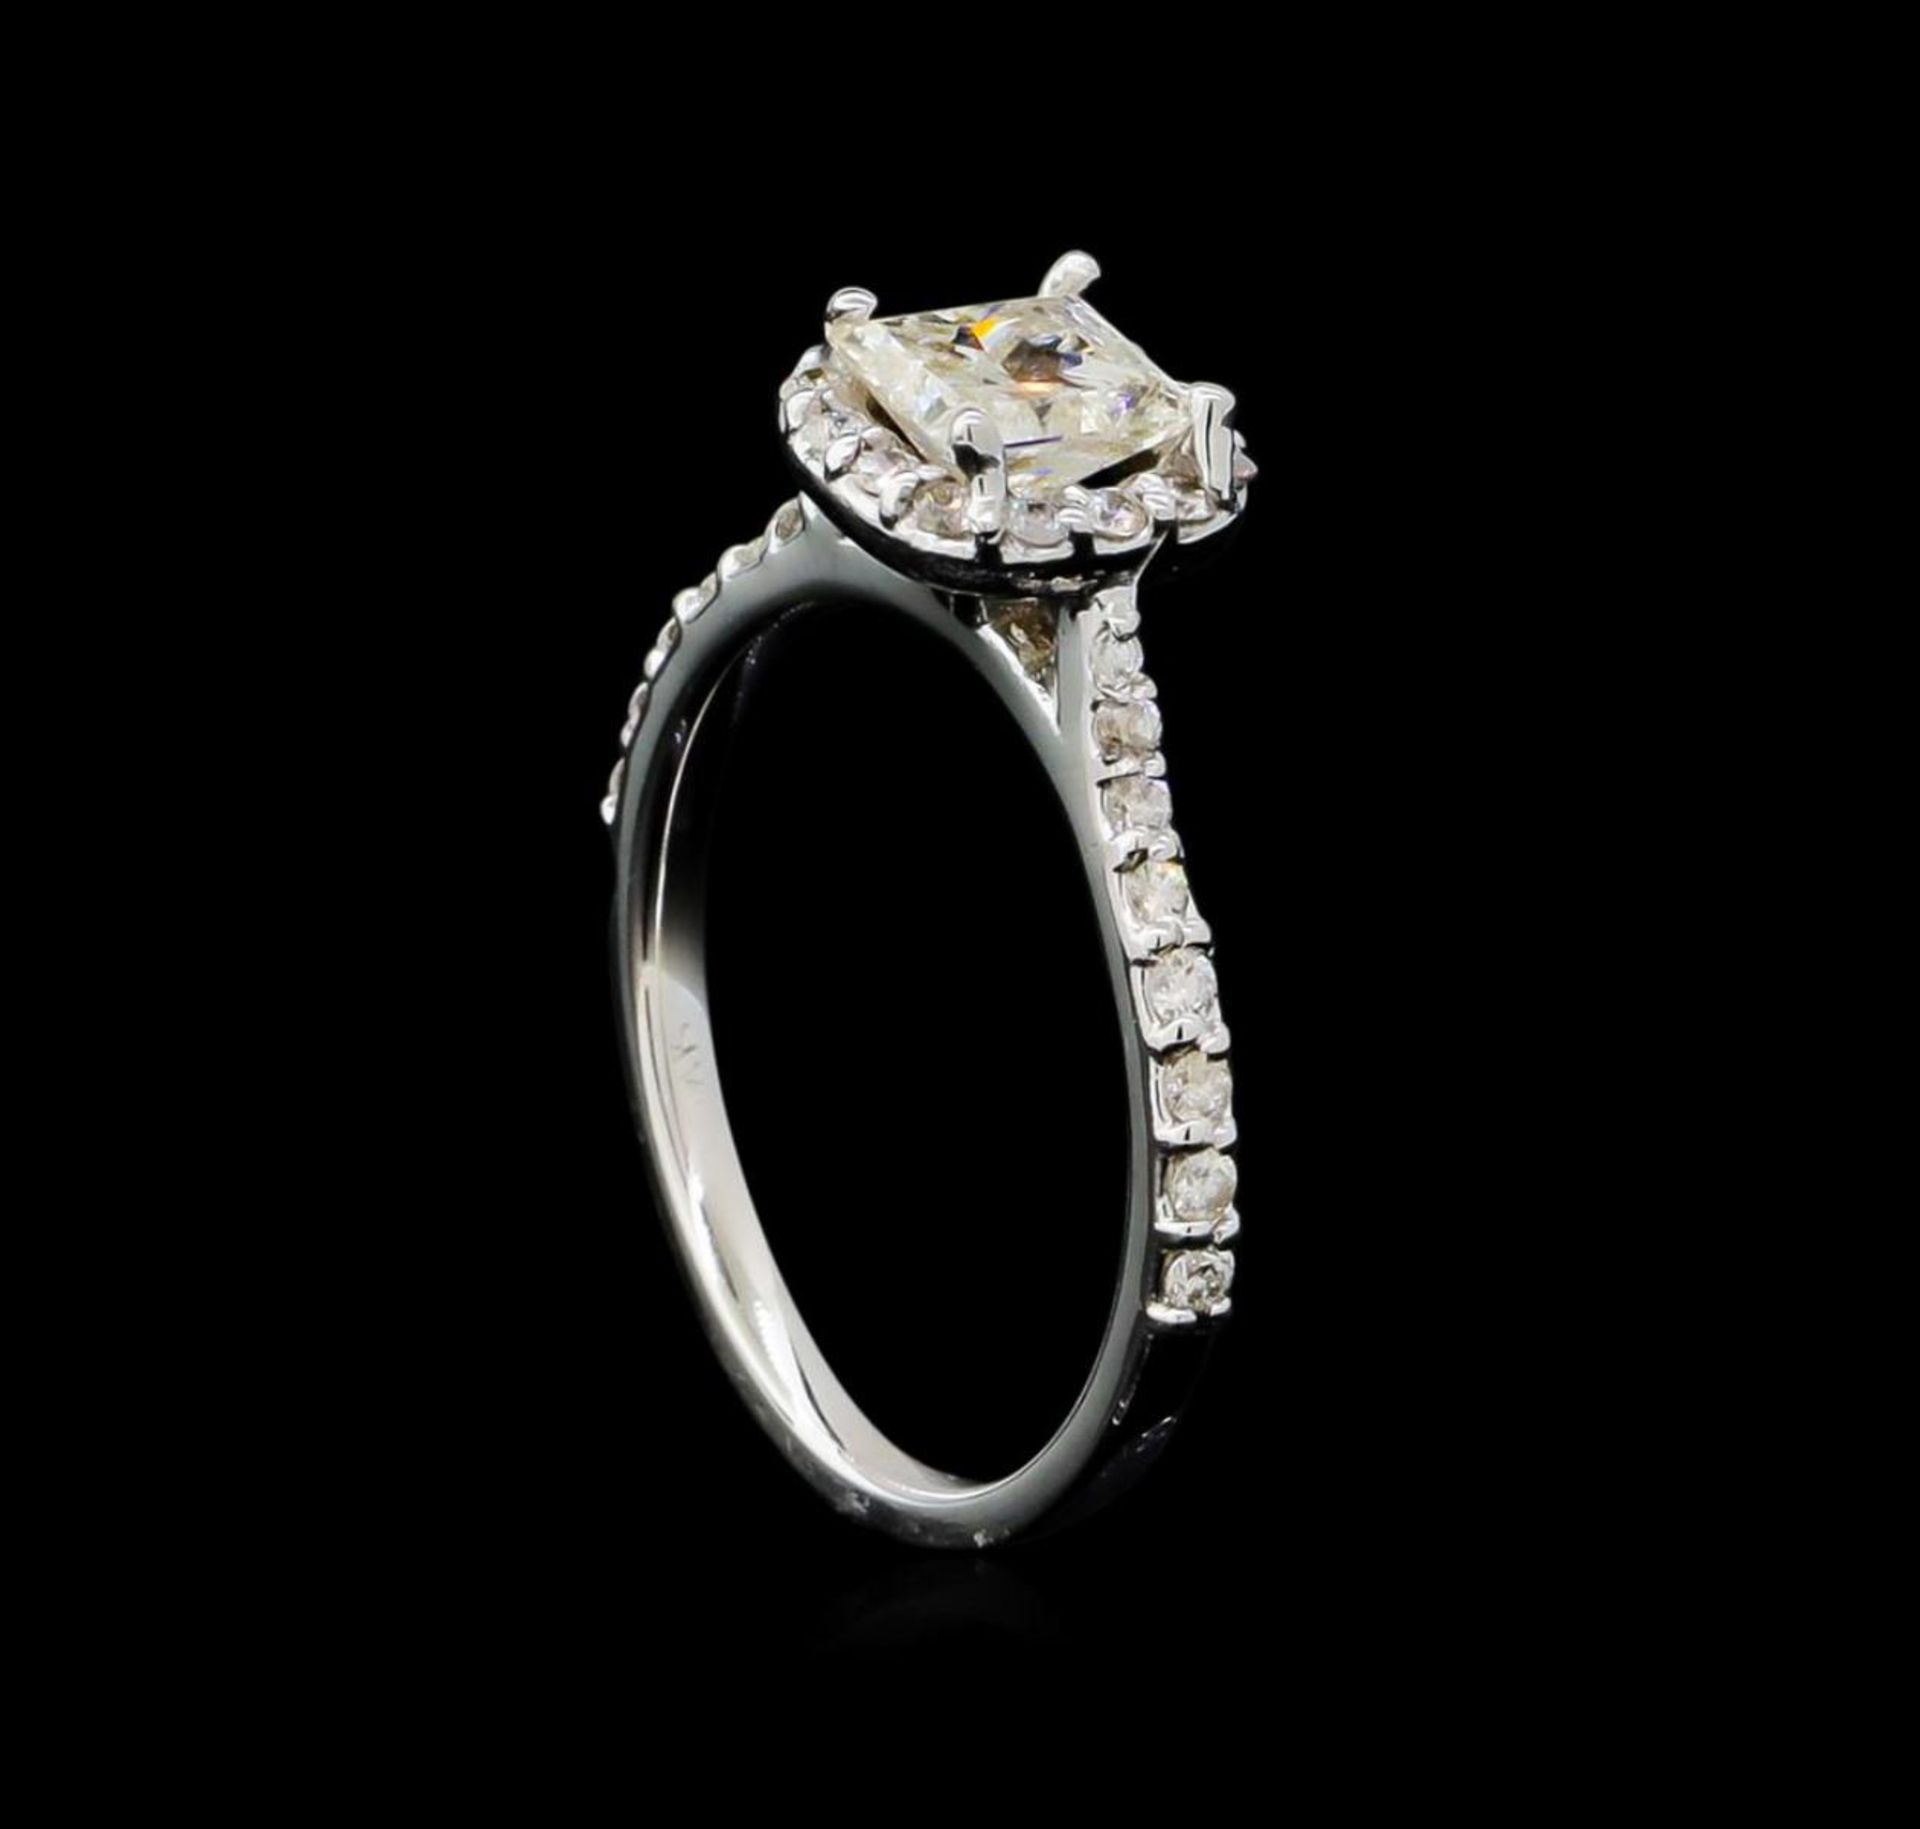 1.17 ctw Diamond Ring - 14KT White Gold - Image 4 of 5